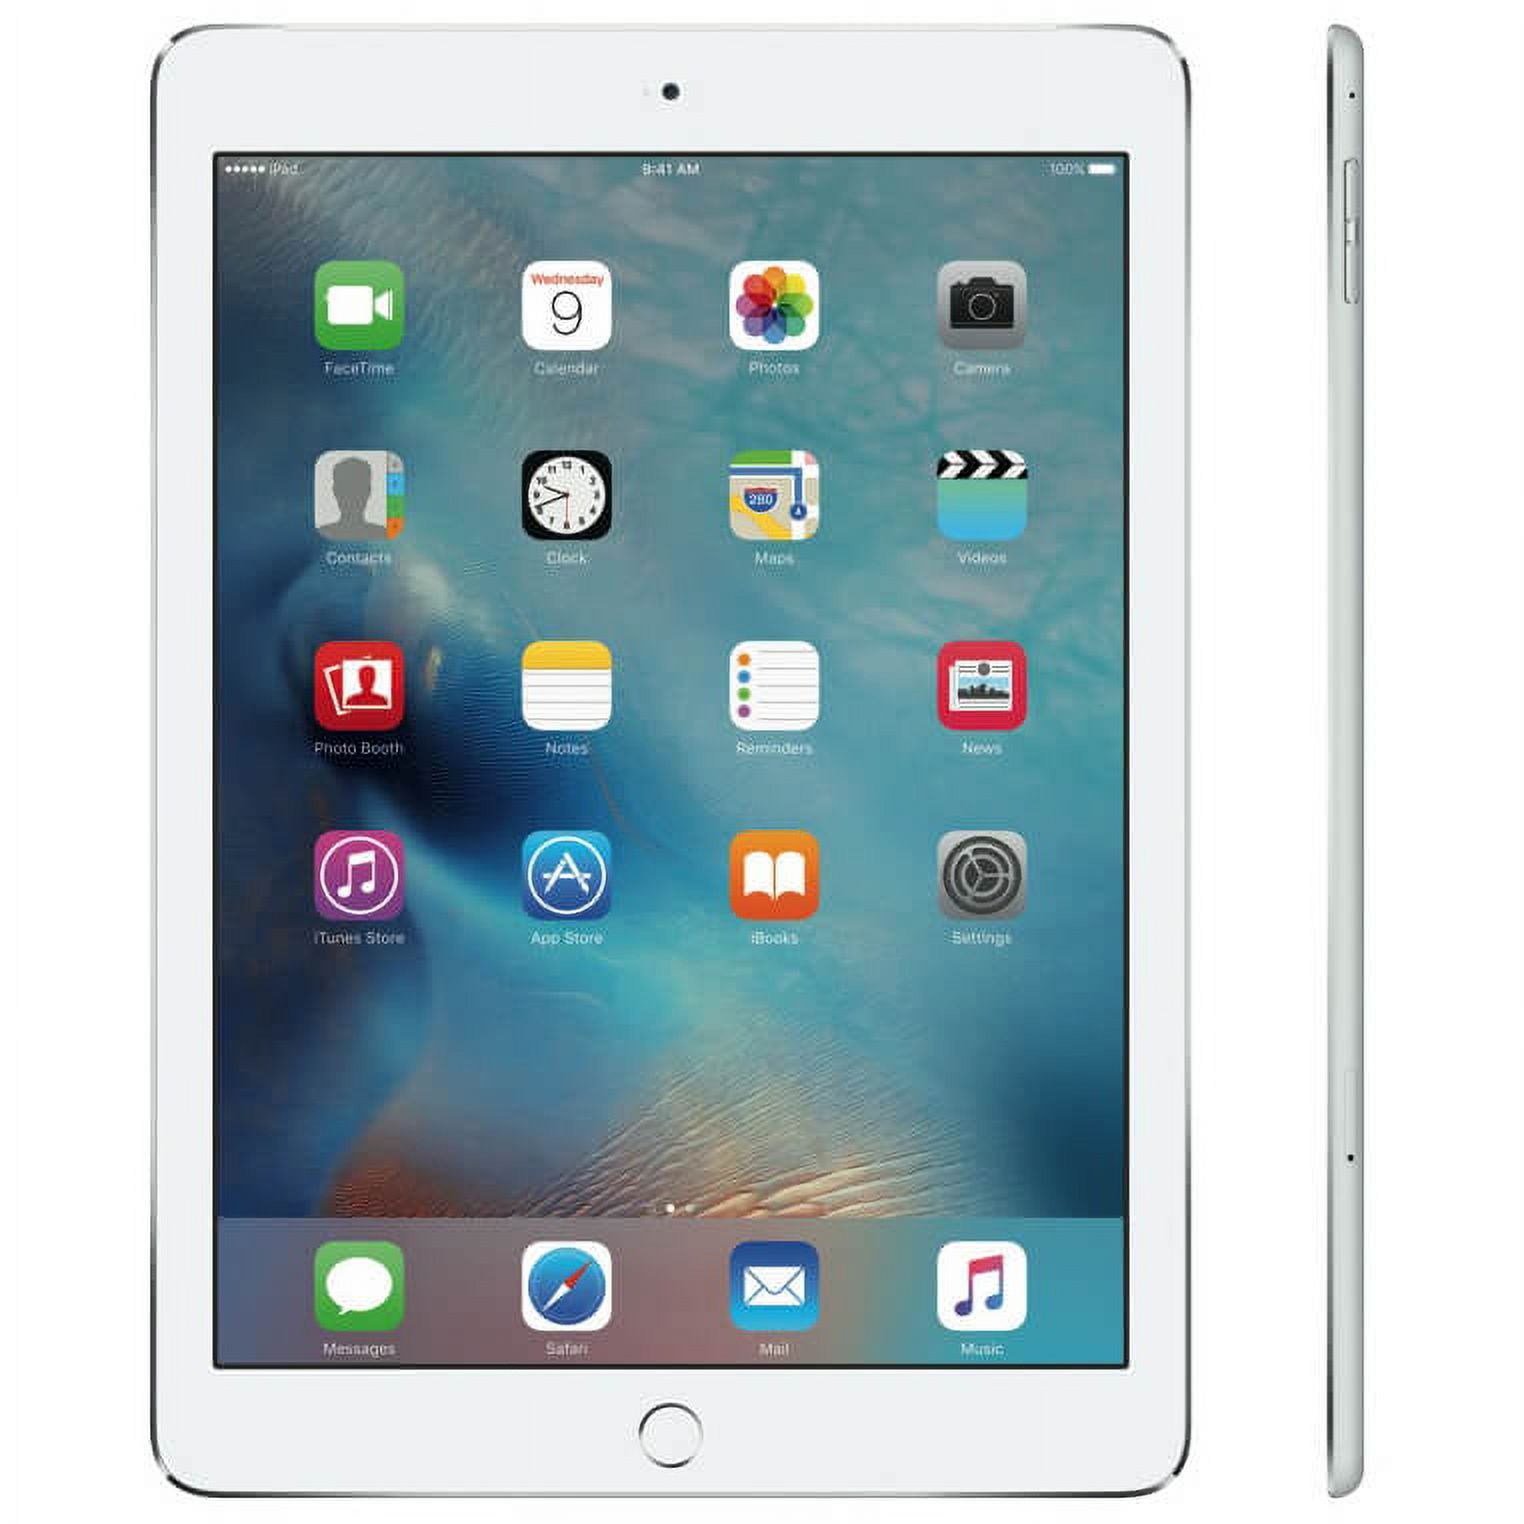 Restored Apple iPad Air 2 16GB WiFi 2GB iOS 10 9.7" Tablet - White & Silver (Refurbished) - image 1 of 4